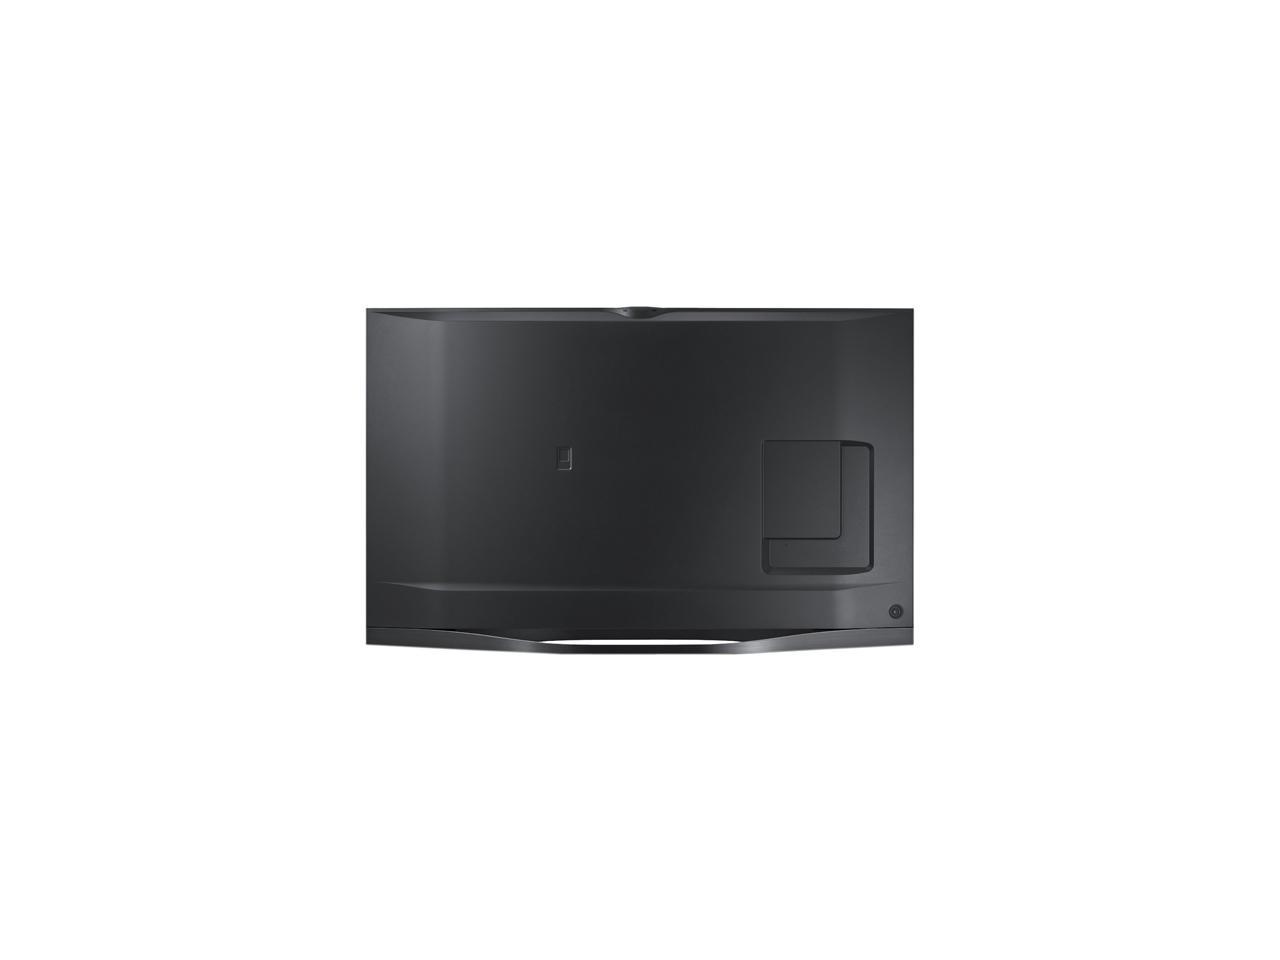 Samsung 8500 51" 1080p 600Hz Plasma HDTV - PN51F8500AFXZA - Newegg.com